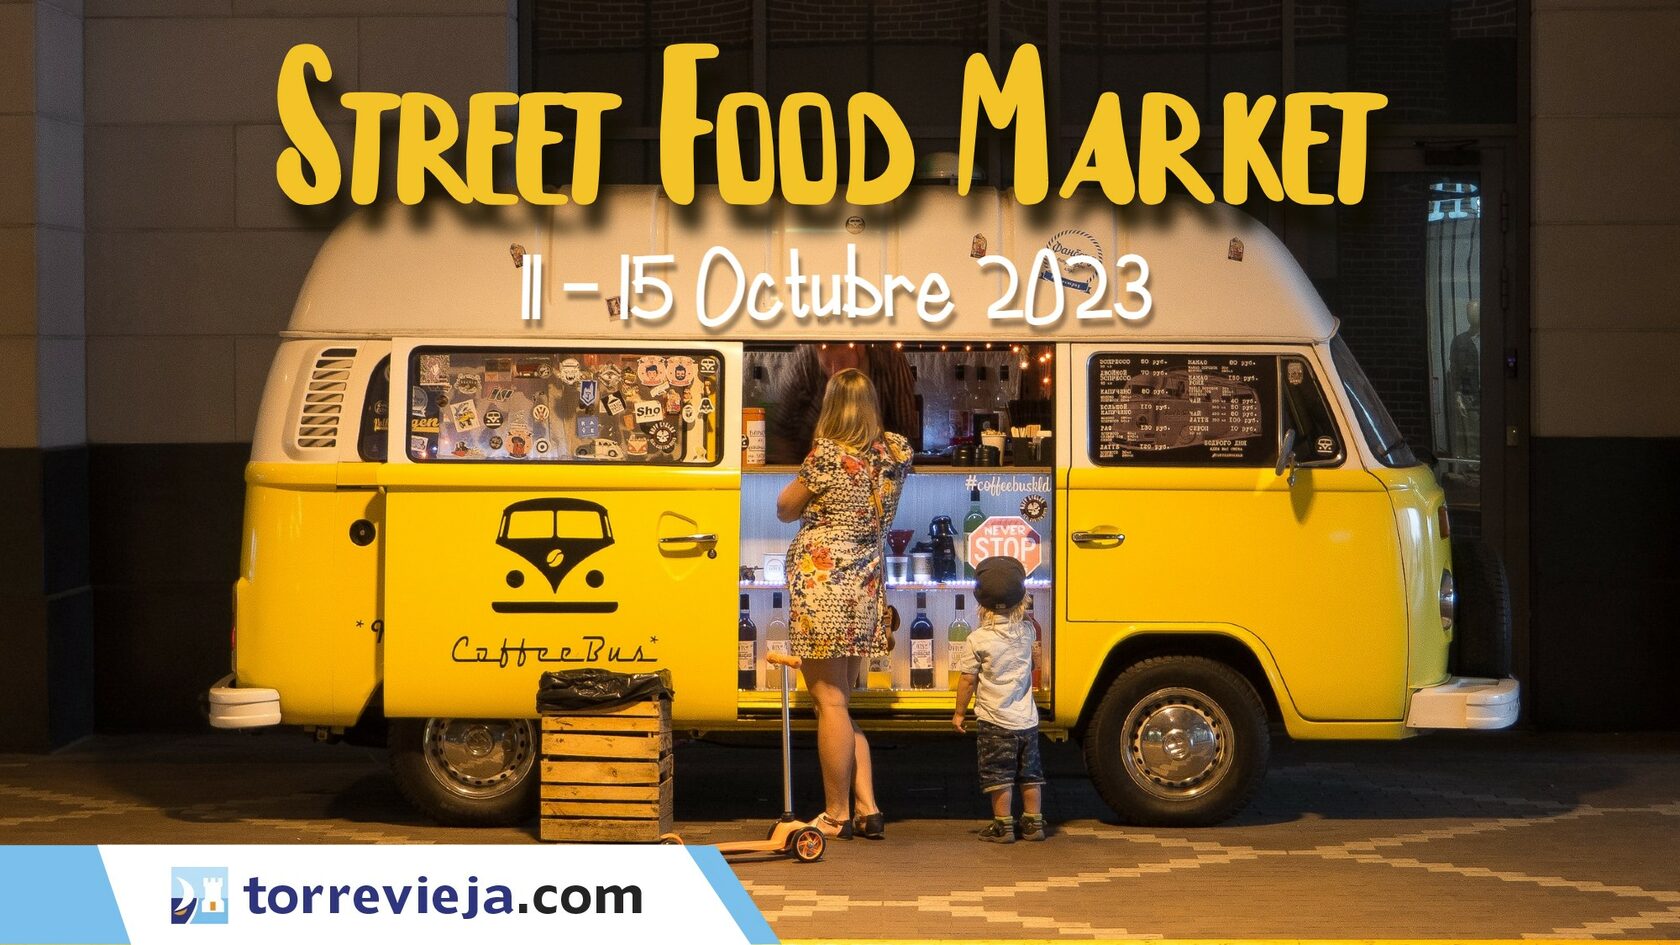 Street Food Market Torrevieja 2023